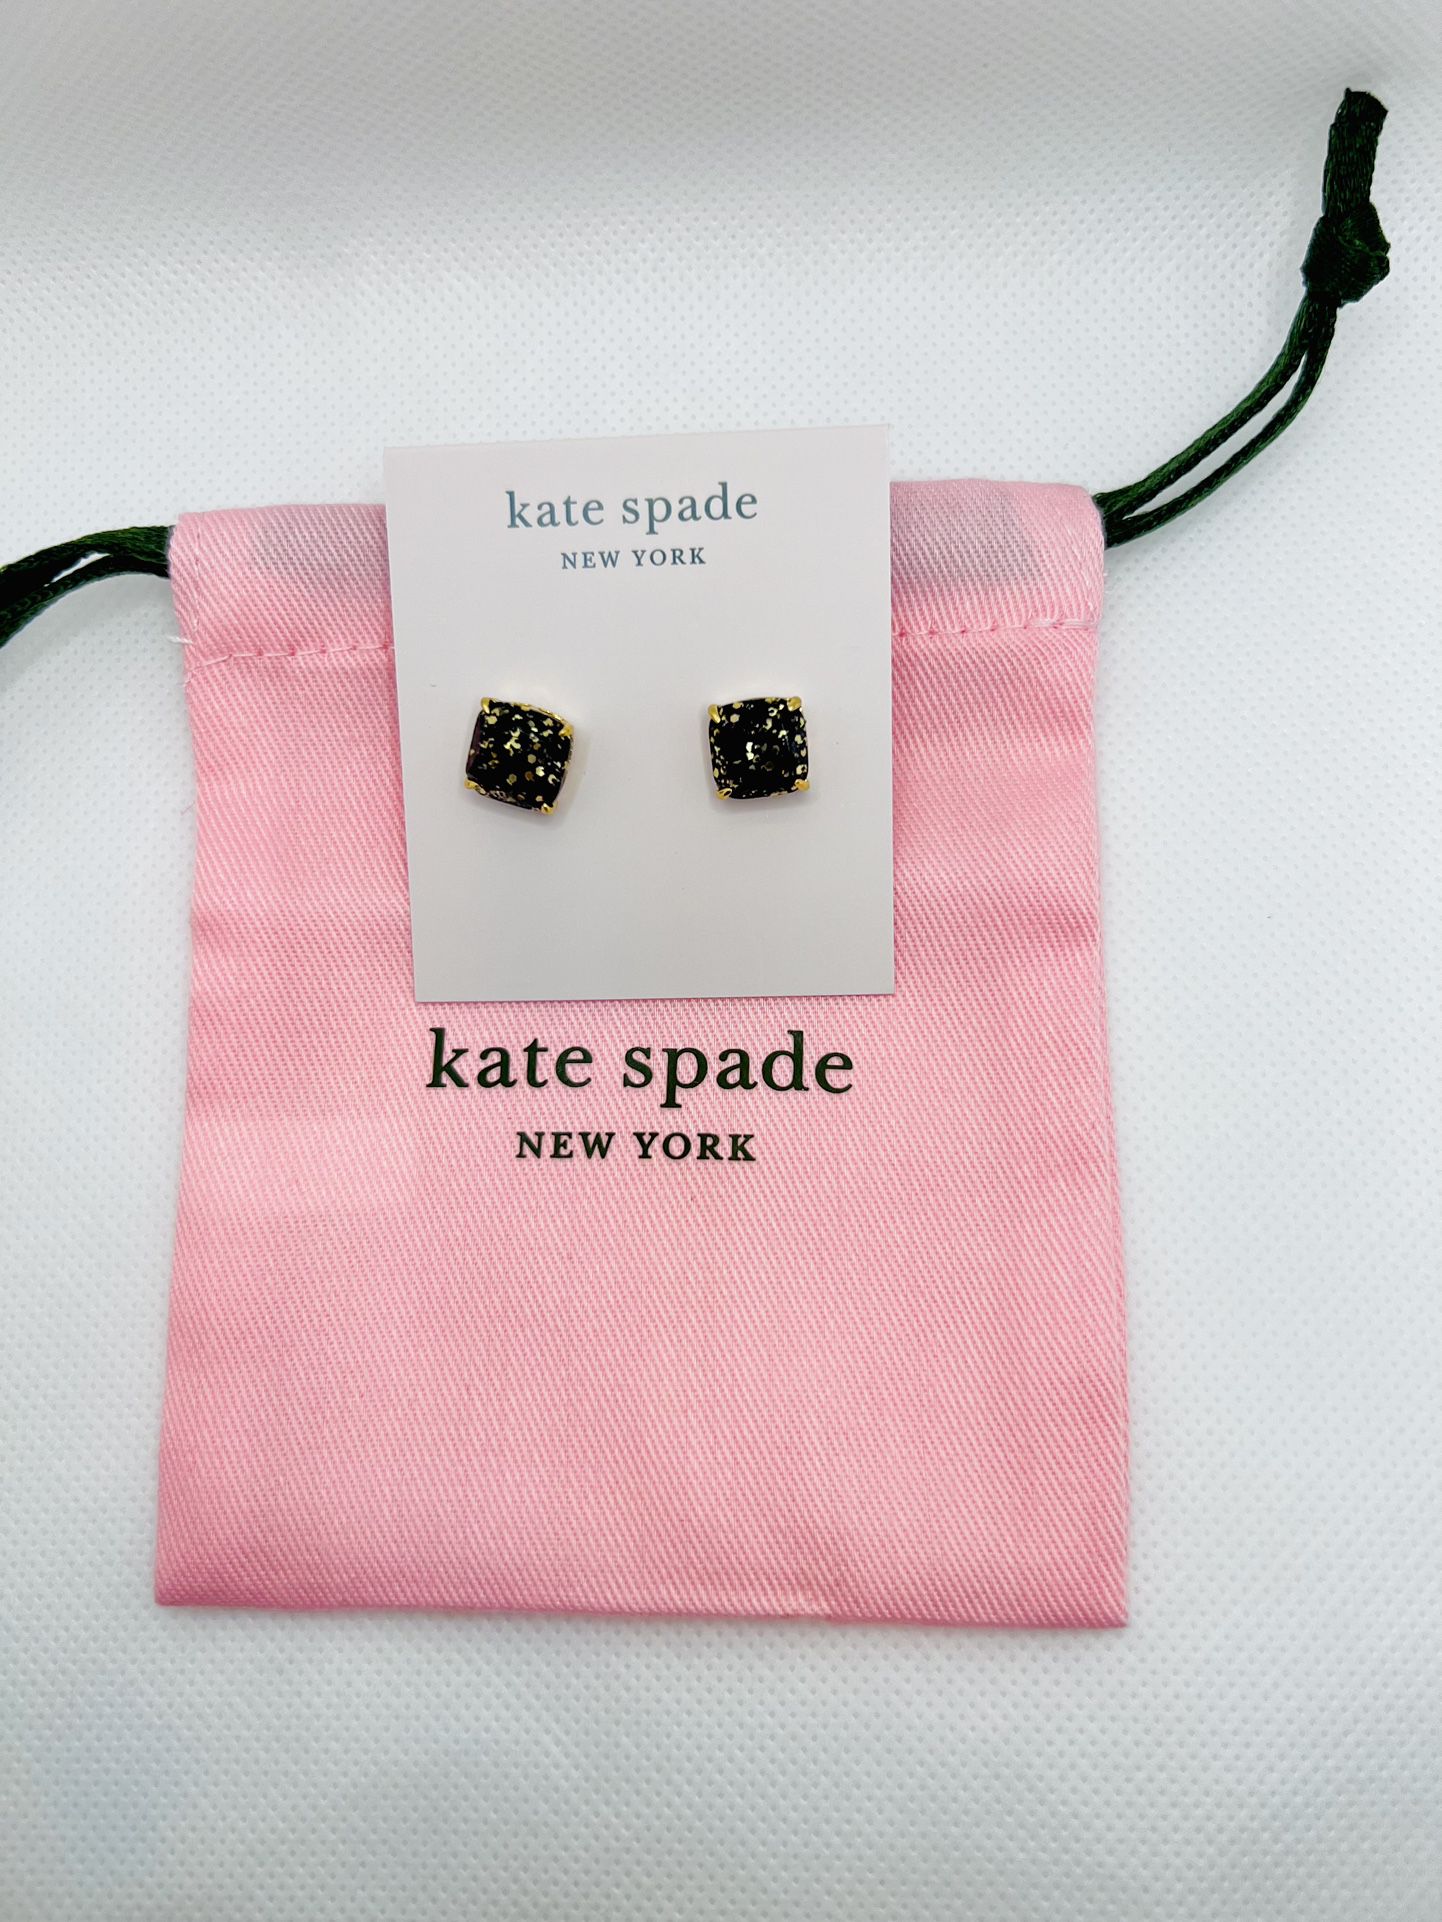 Kate Spade New York Earrings Black/ Gold Square, Glitter Stud Earrings. New  for Sale in Providence, RI - OfferUp